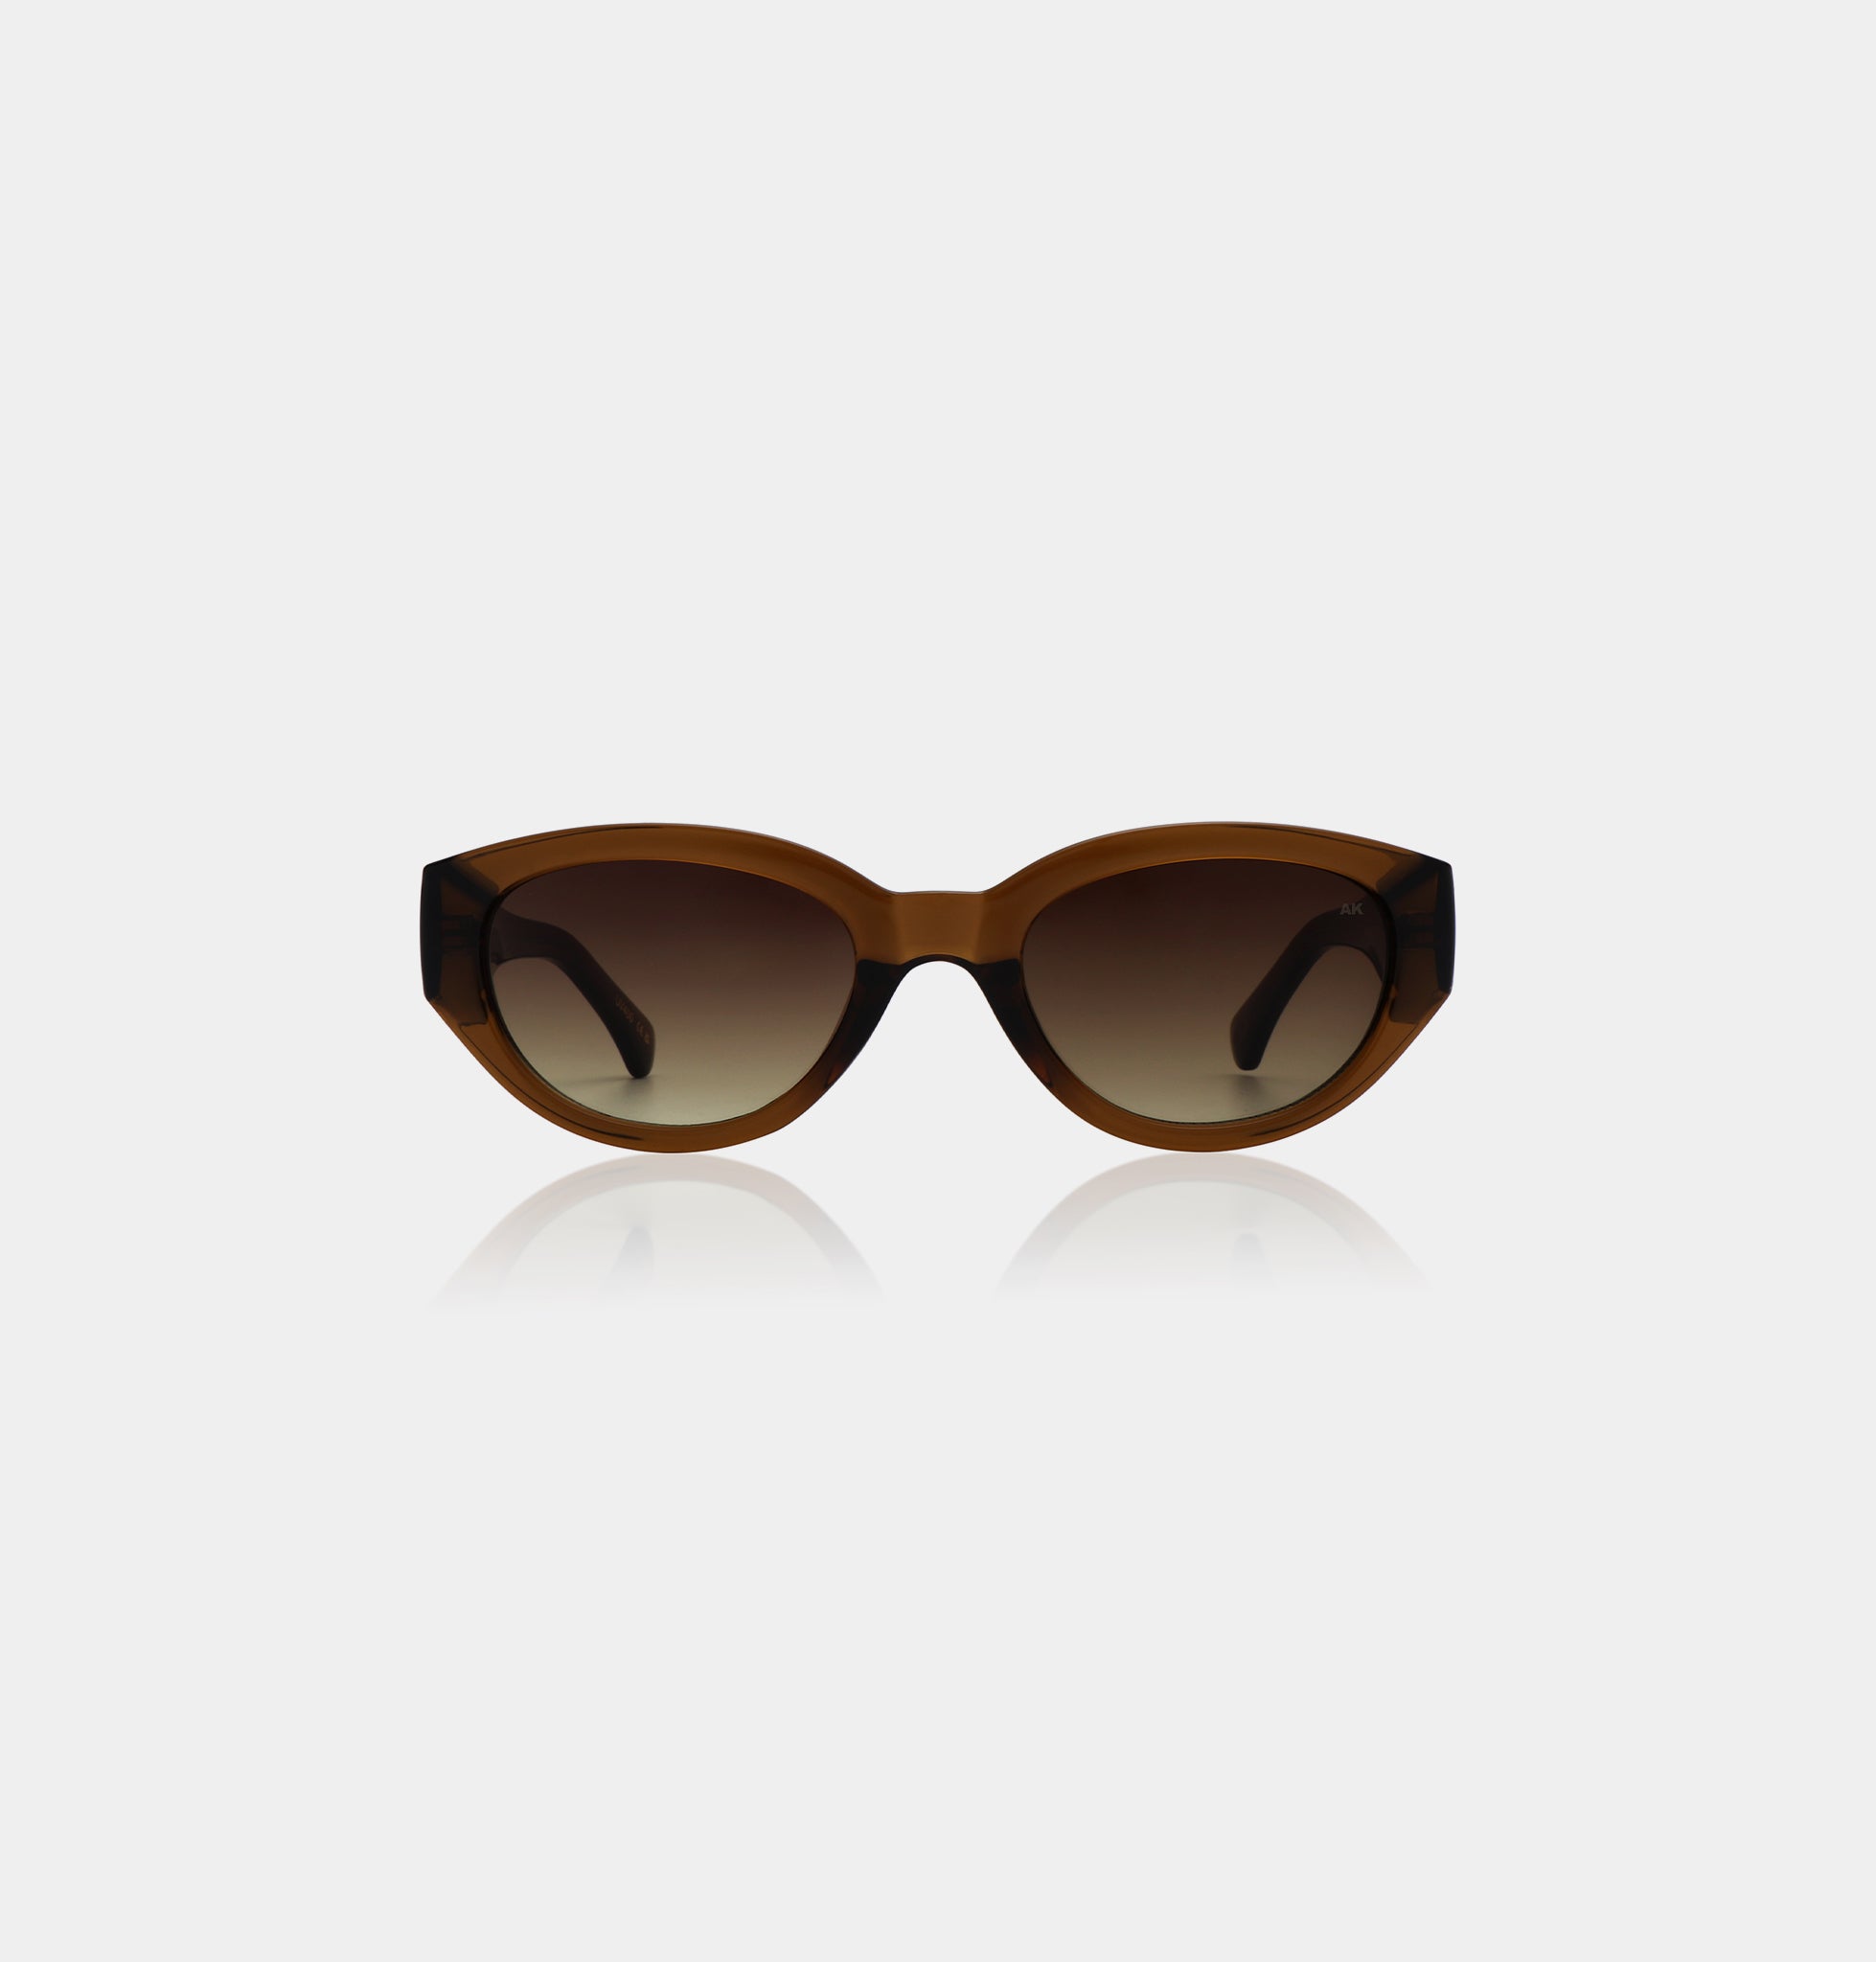 Winnie sunglasses in smoke transparent